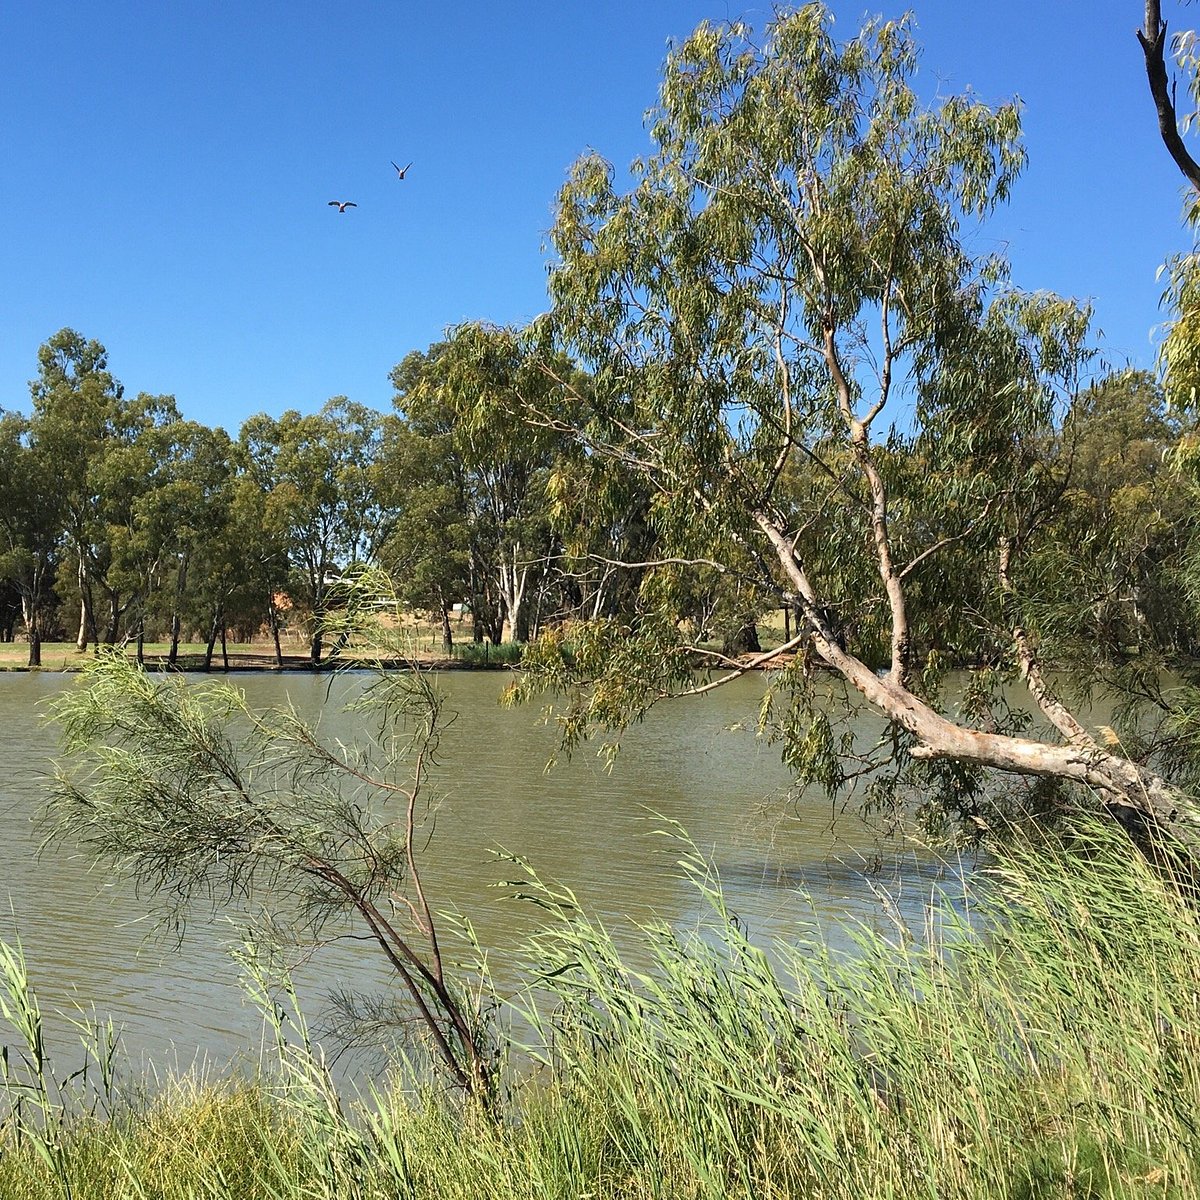 Река дарлинг полноводна. Река Дарлинг. Река Вентворт. Река Дарлинг в Австралии фото. Darling River.